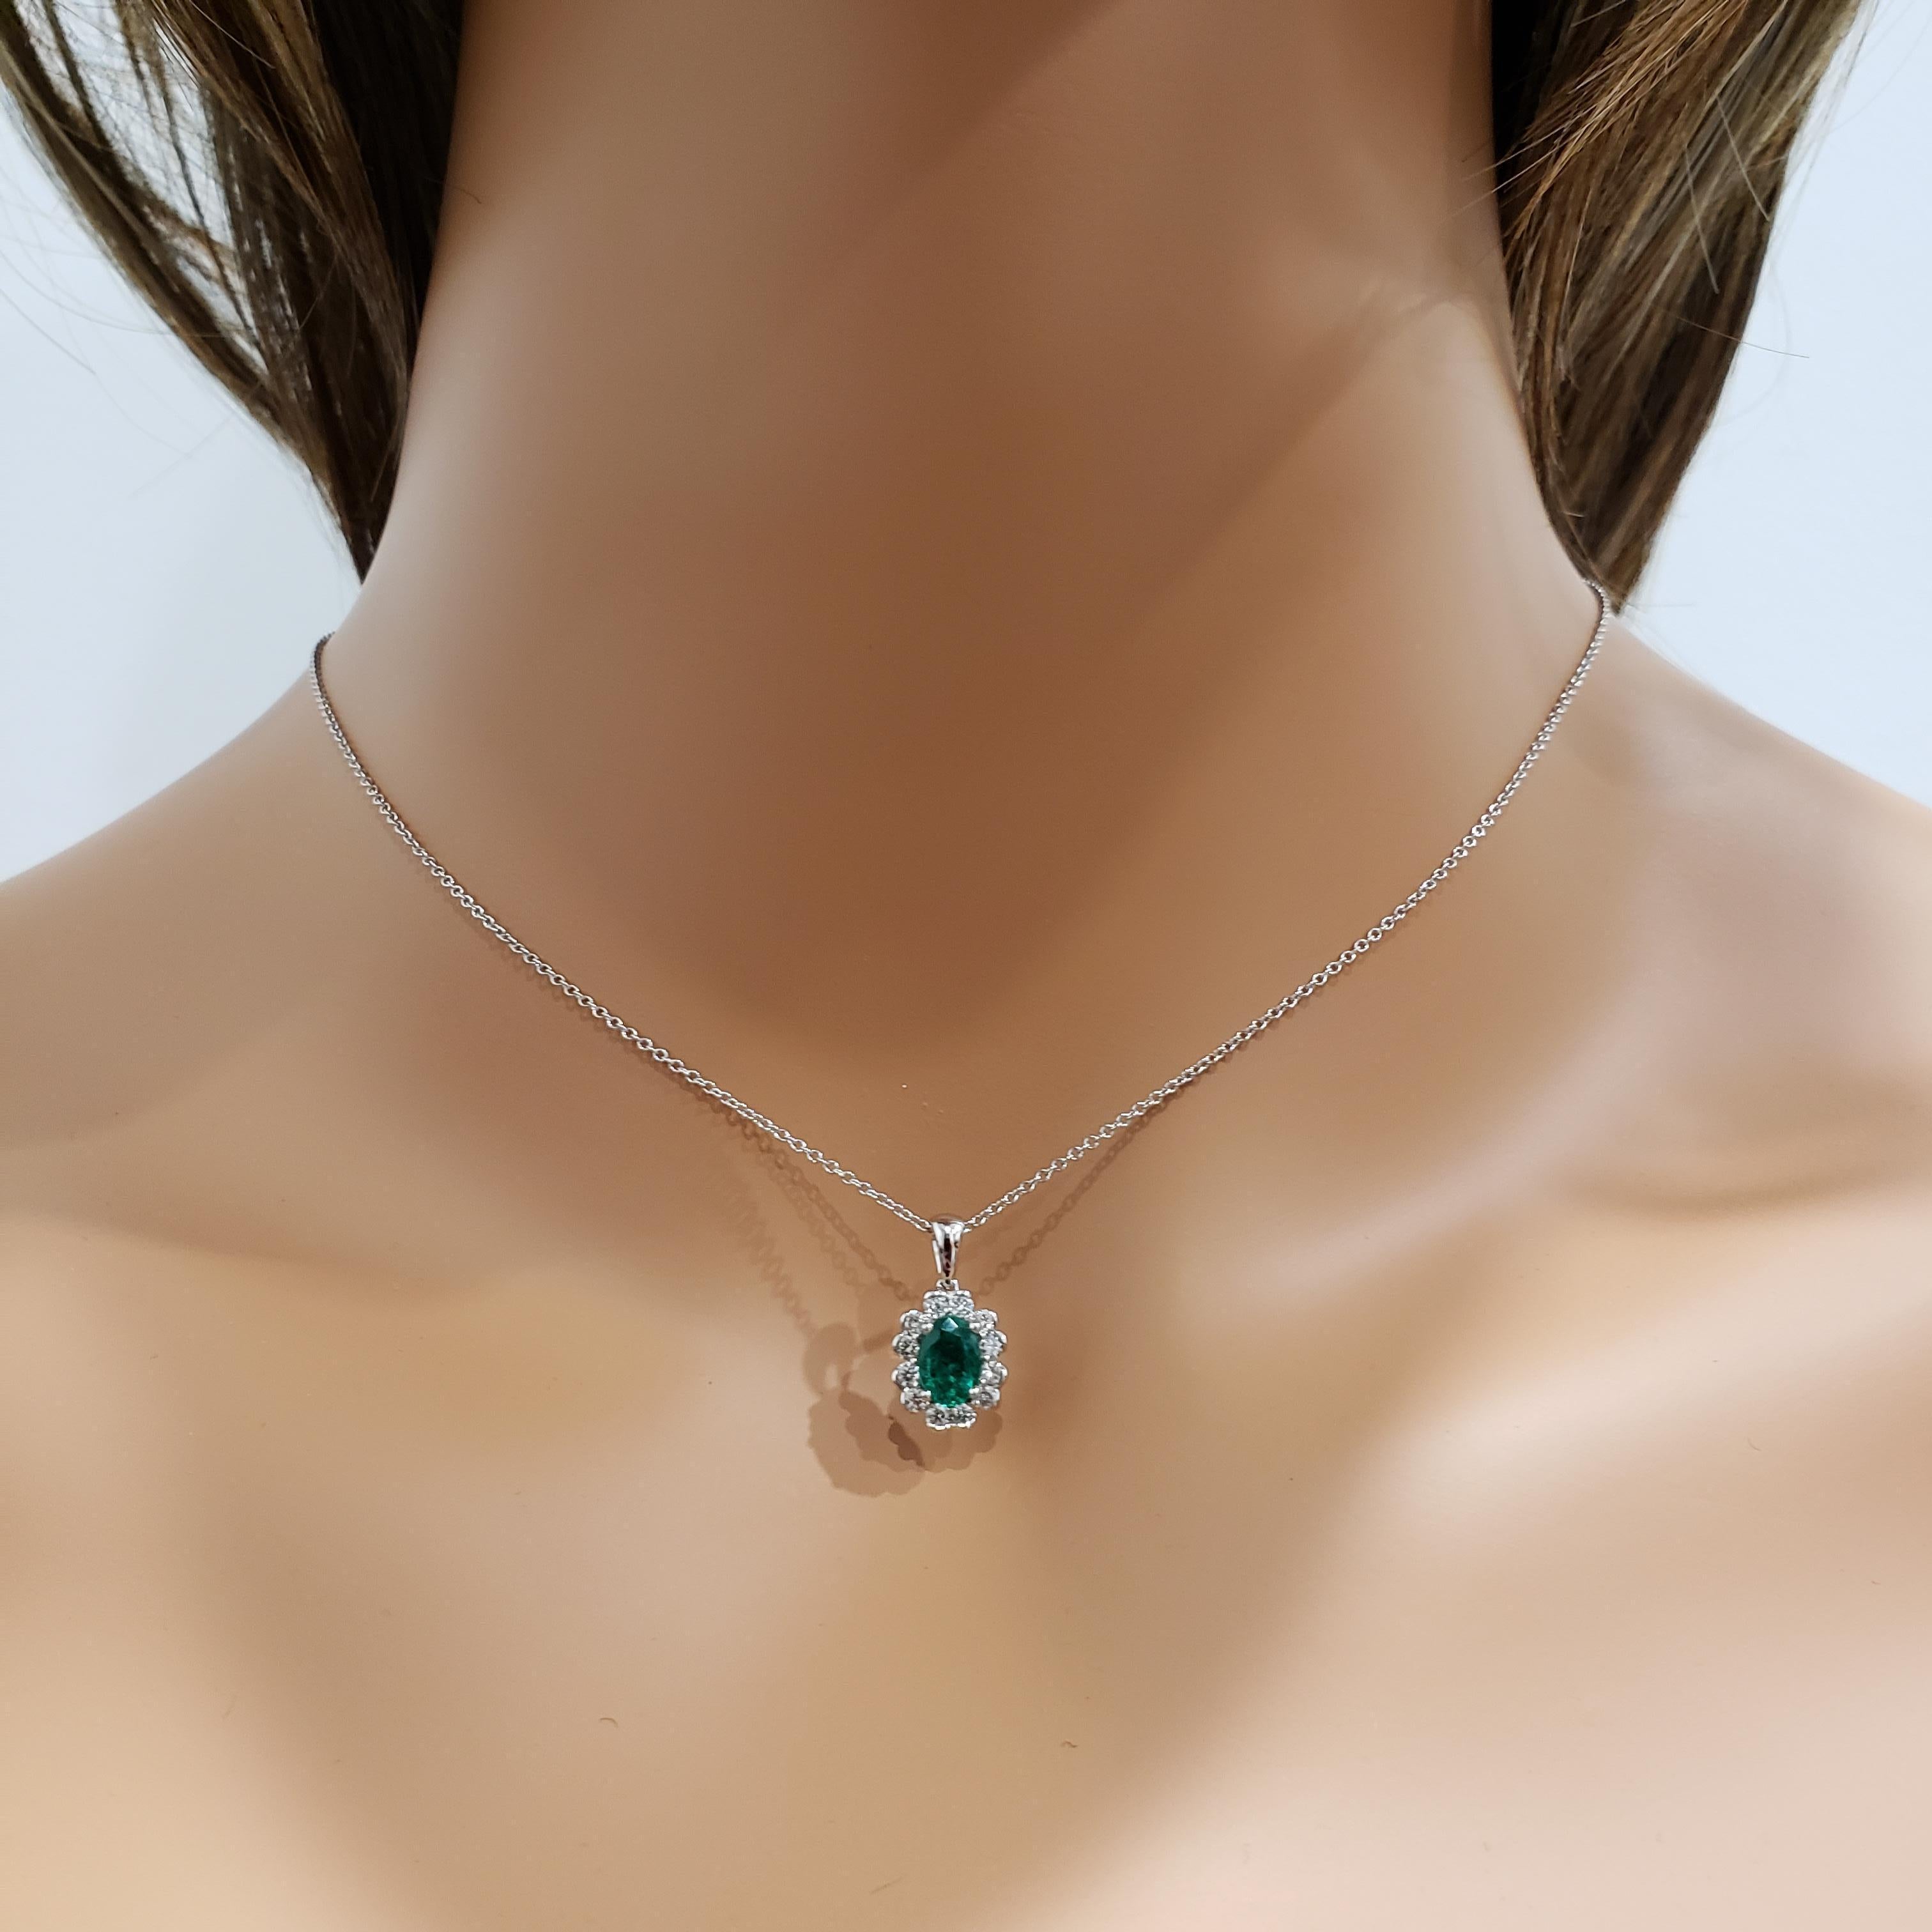 Roman Malakov 0.71 Carat Oval Cut Green Emerald and Diamond Pendant Necklace For Sale 2